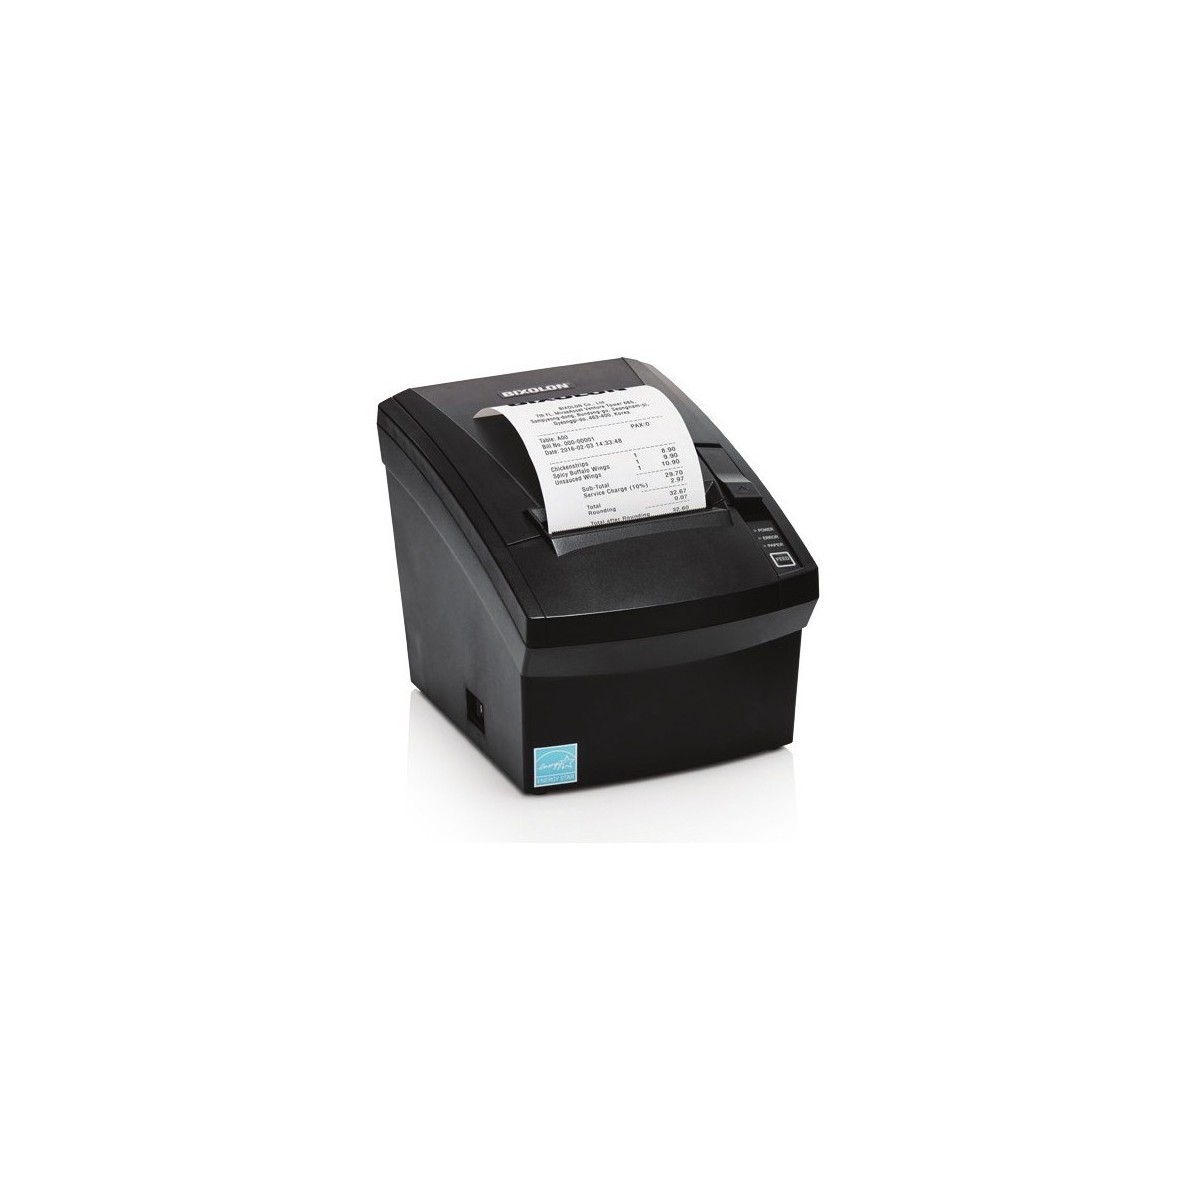 BIXOLON SRP-330IICOSK - Thermal - POS printer - 180 x 180 DPI - 220 mm-sec - 8 cm - Wired